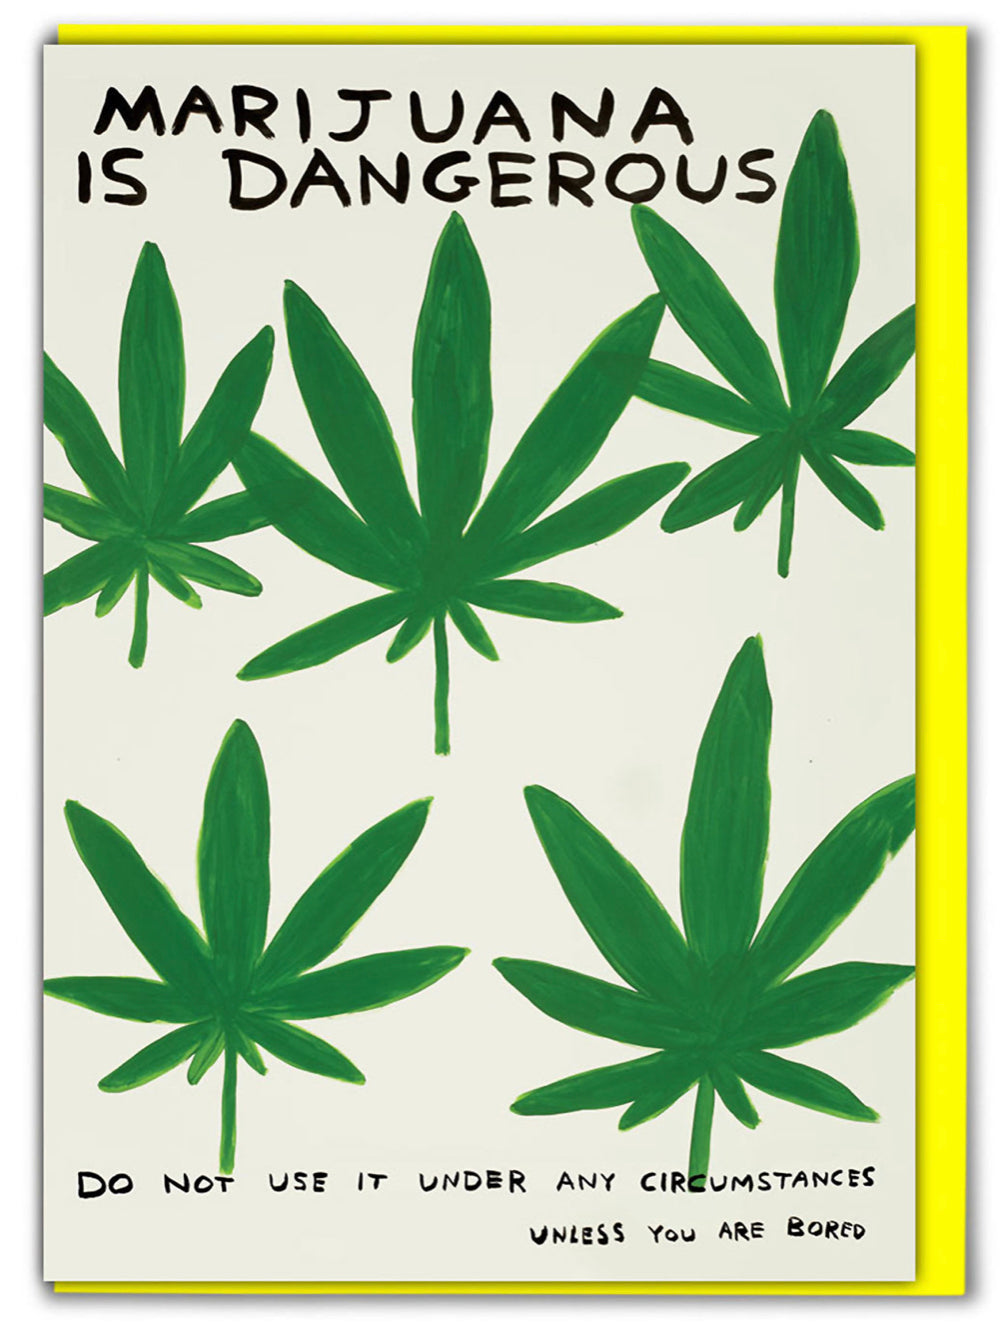 Marijuana is dangerous